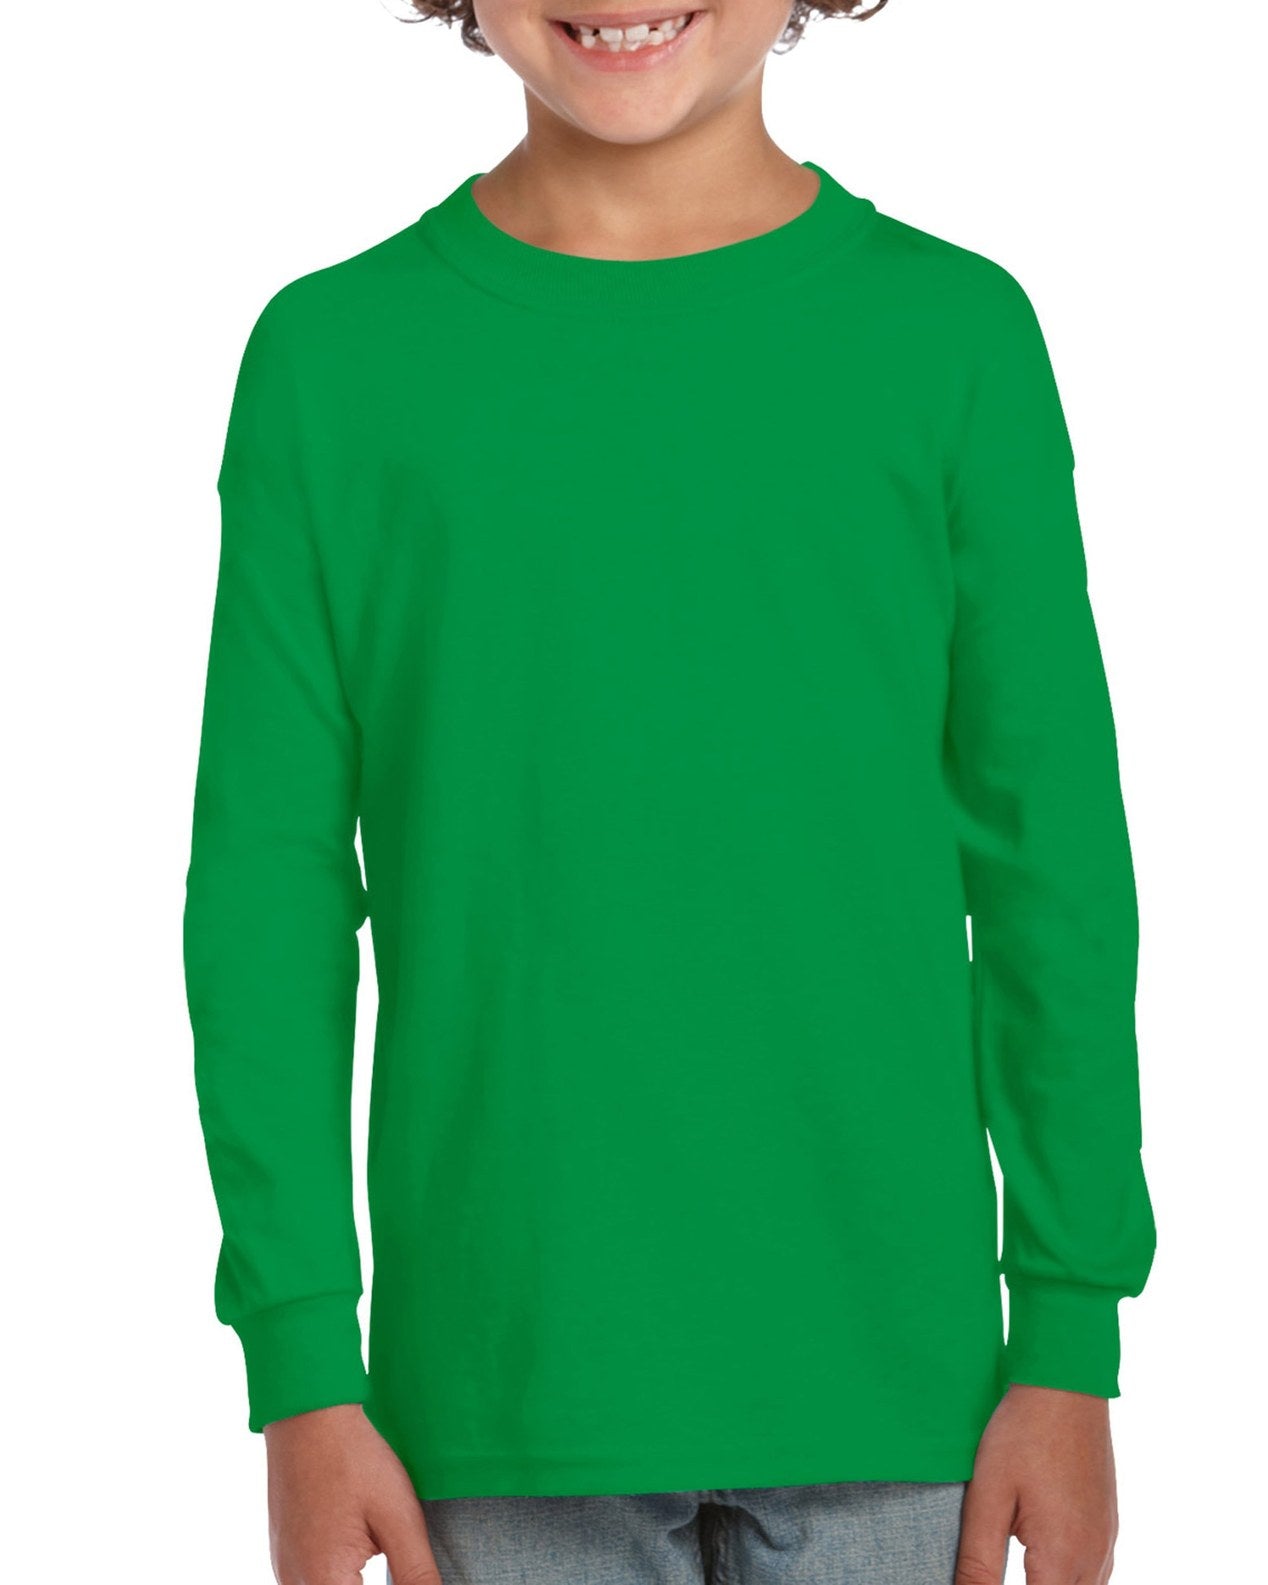 Gildan Youth Long Sleeve T-Shirt - Kelly Green Small